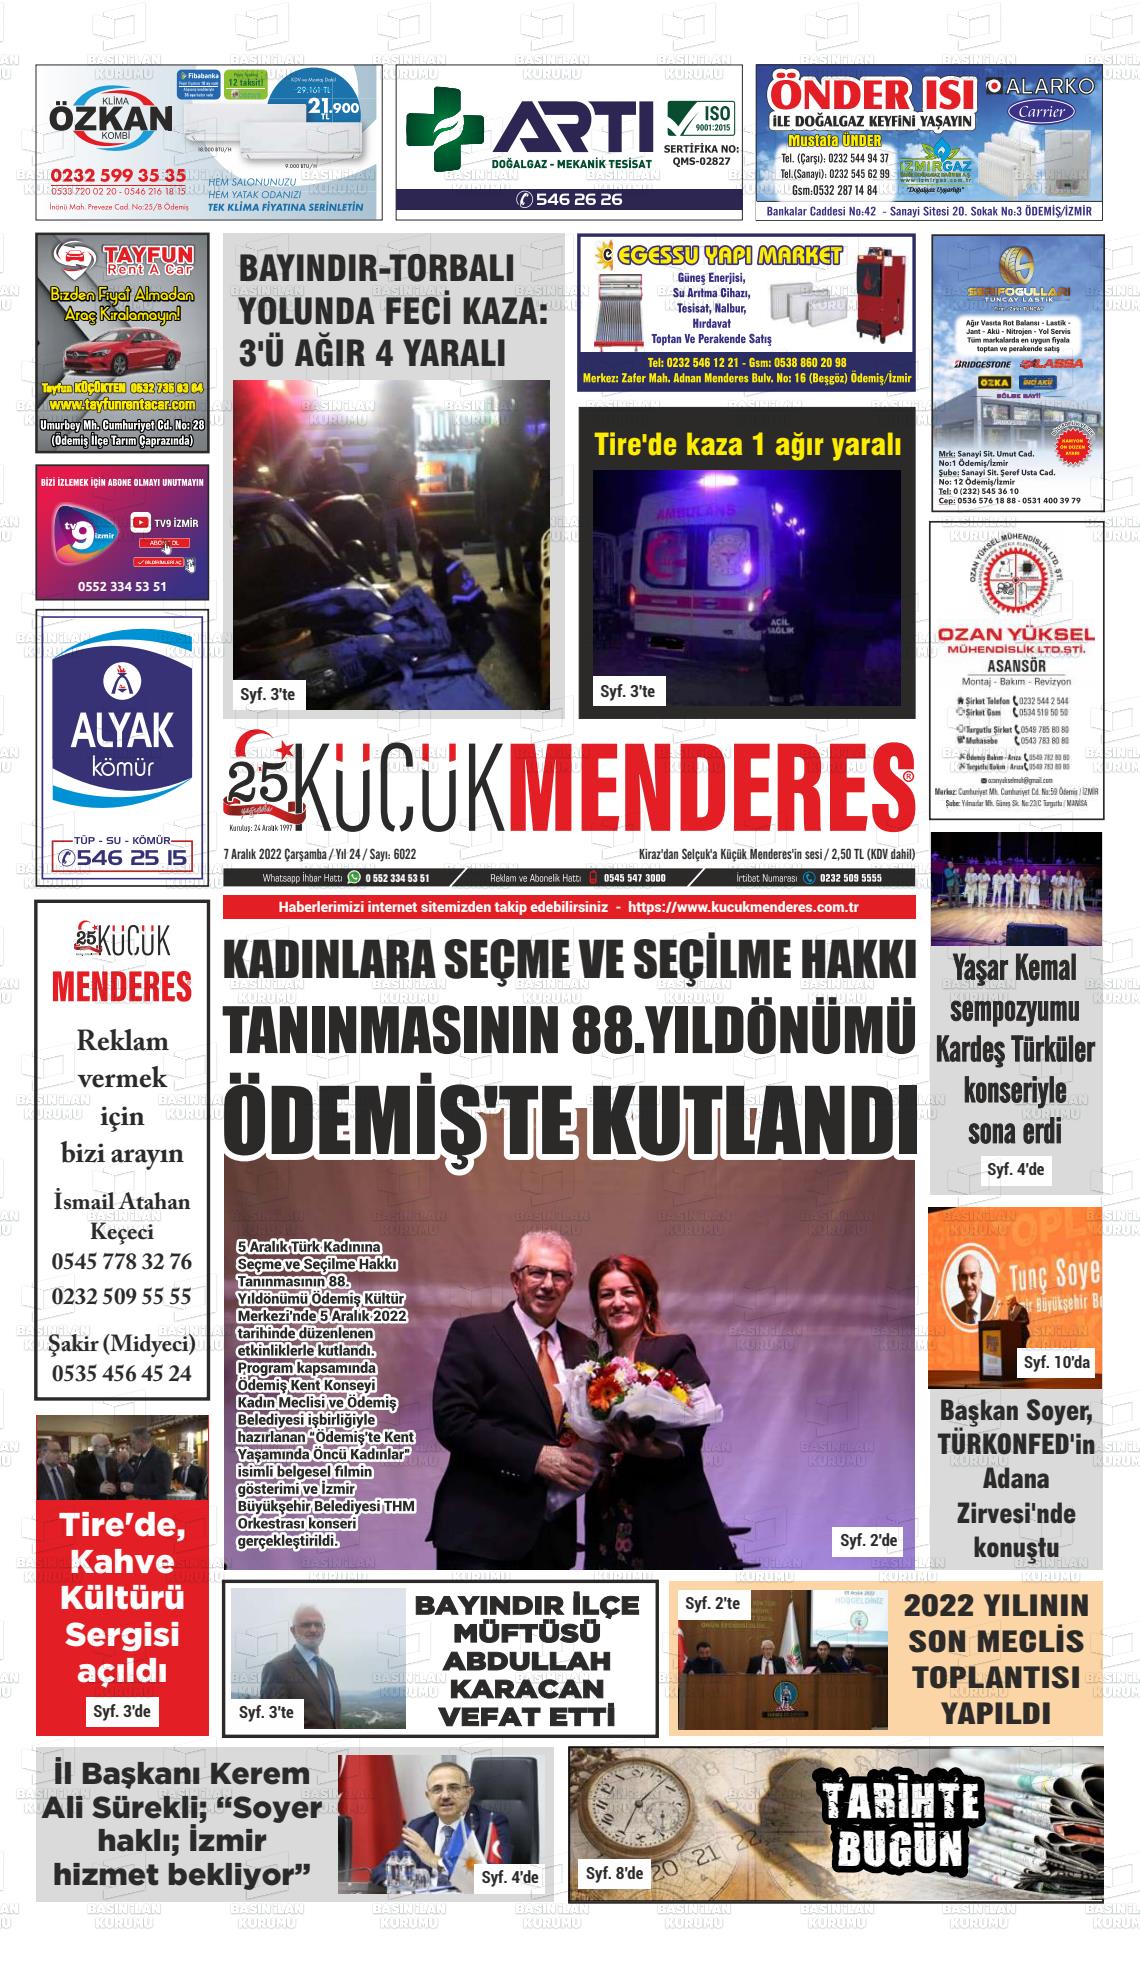 07 Aralık 2022 Küçük Menderes Gazete Manşeti